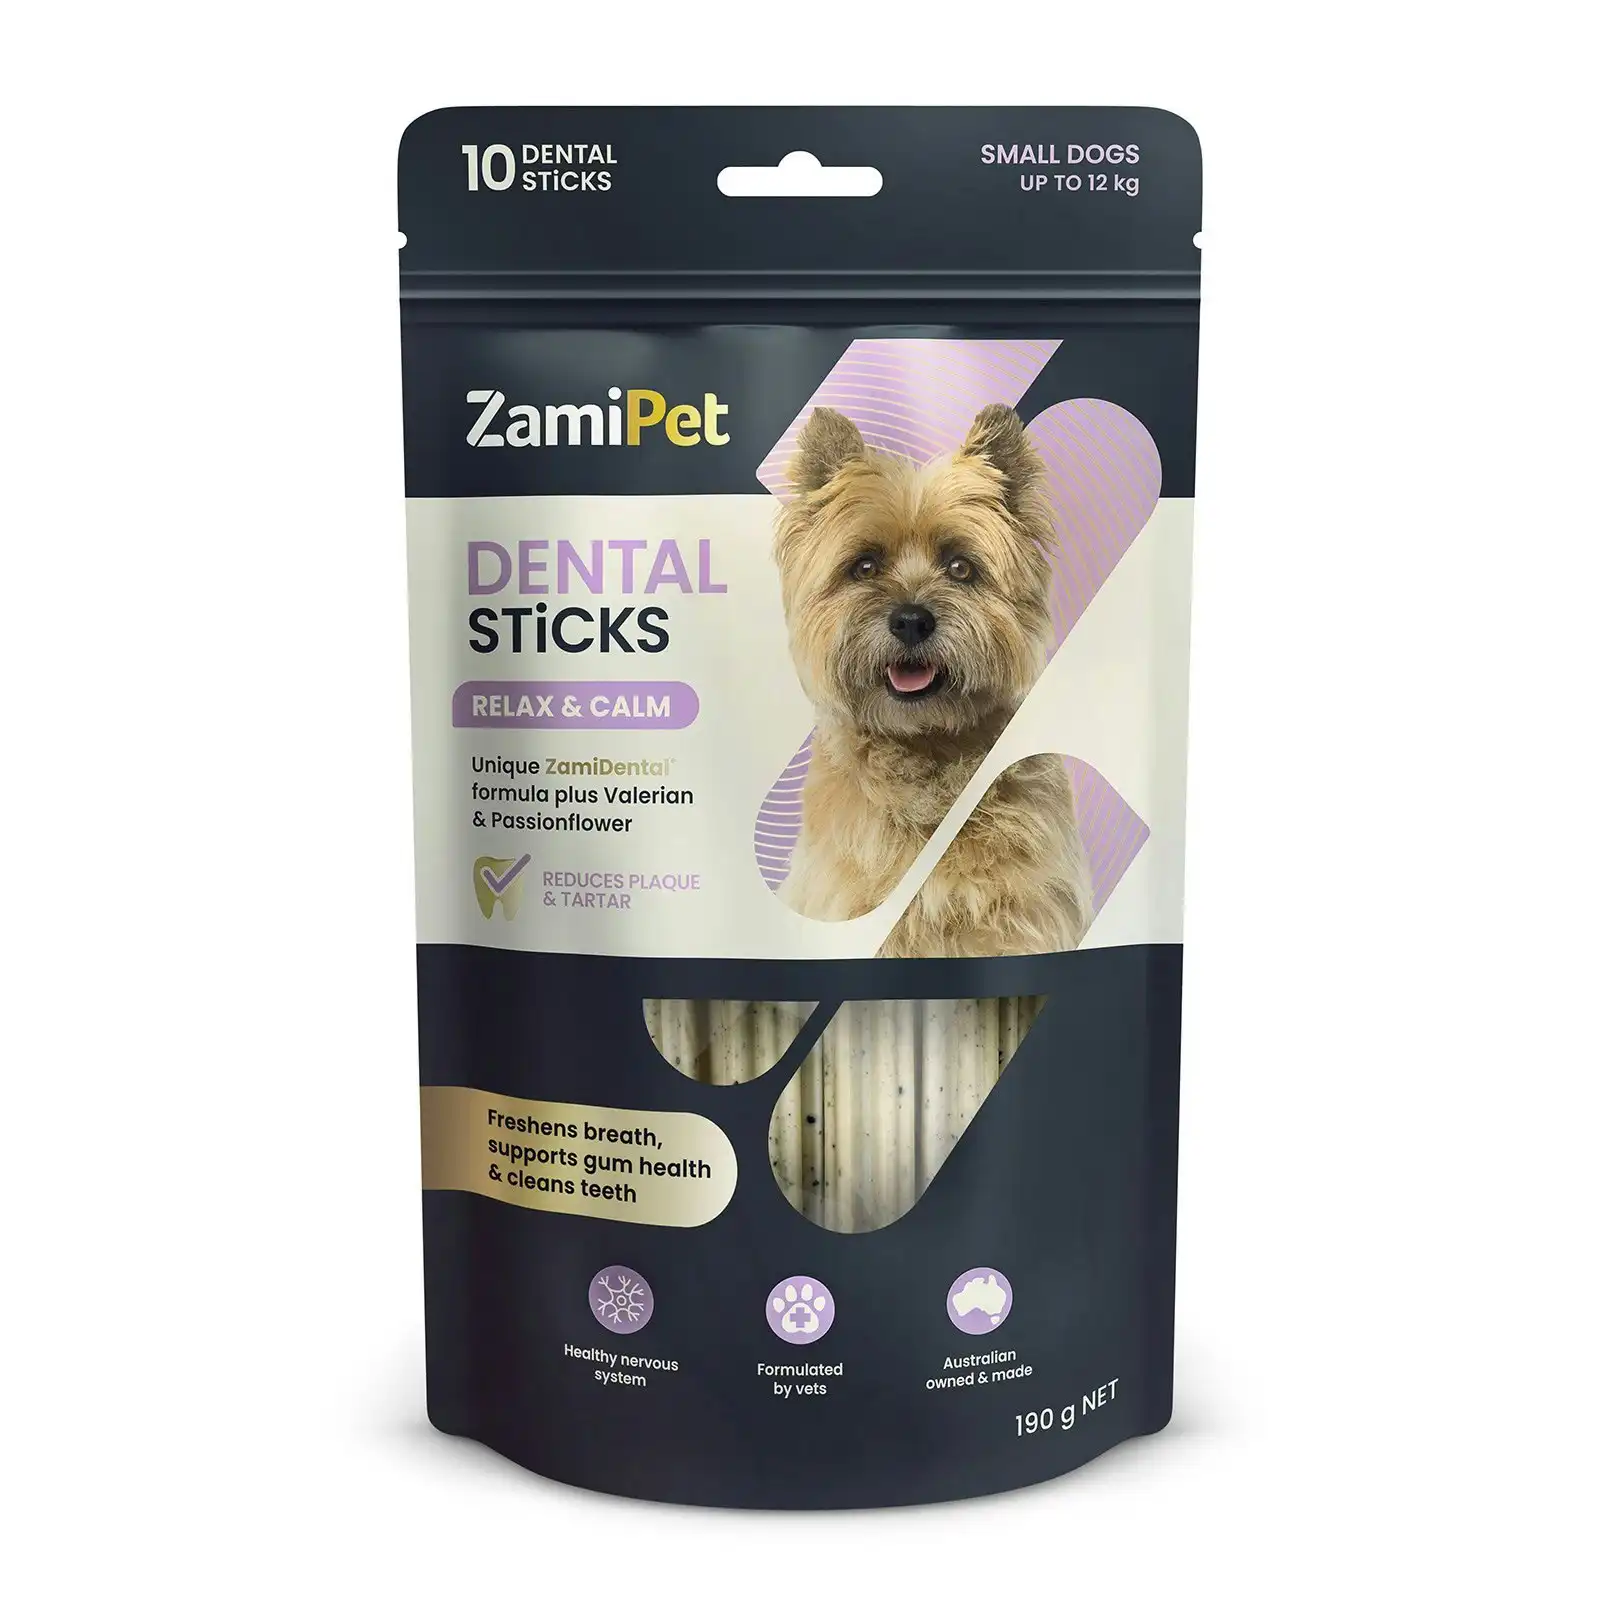 ZamiPet Dental Sticks Relax & Calm Treats For Small Dogs Up To 12kg 10 Sticks 190 GM